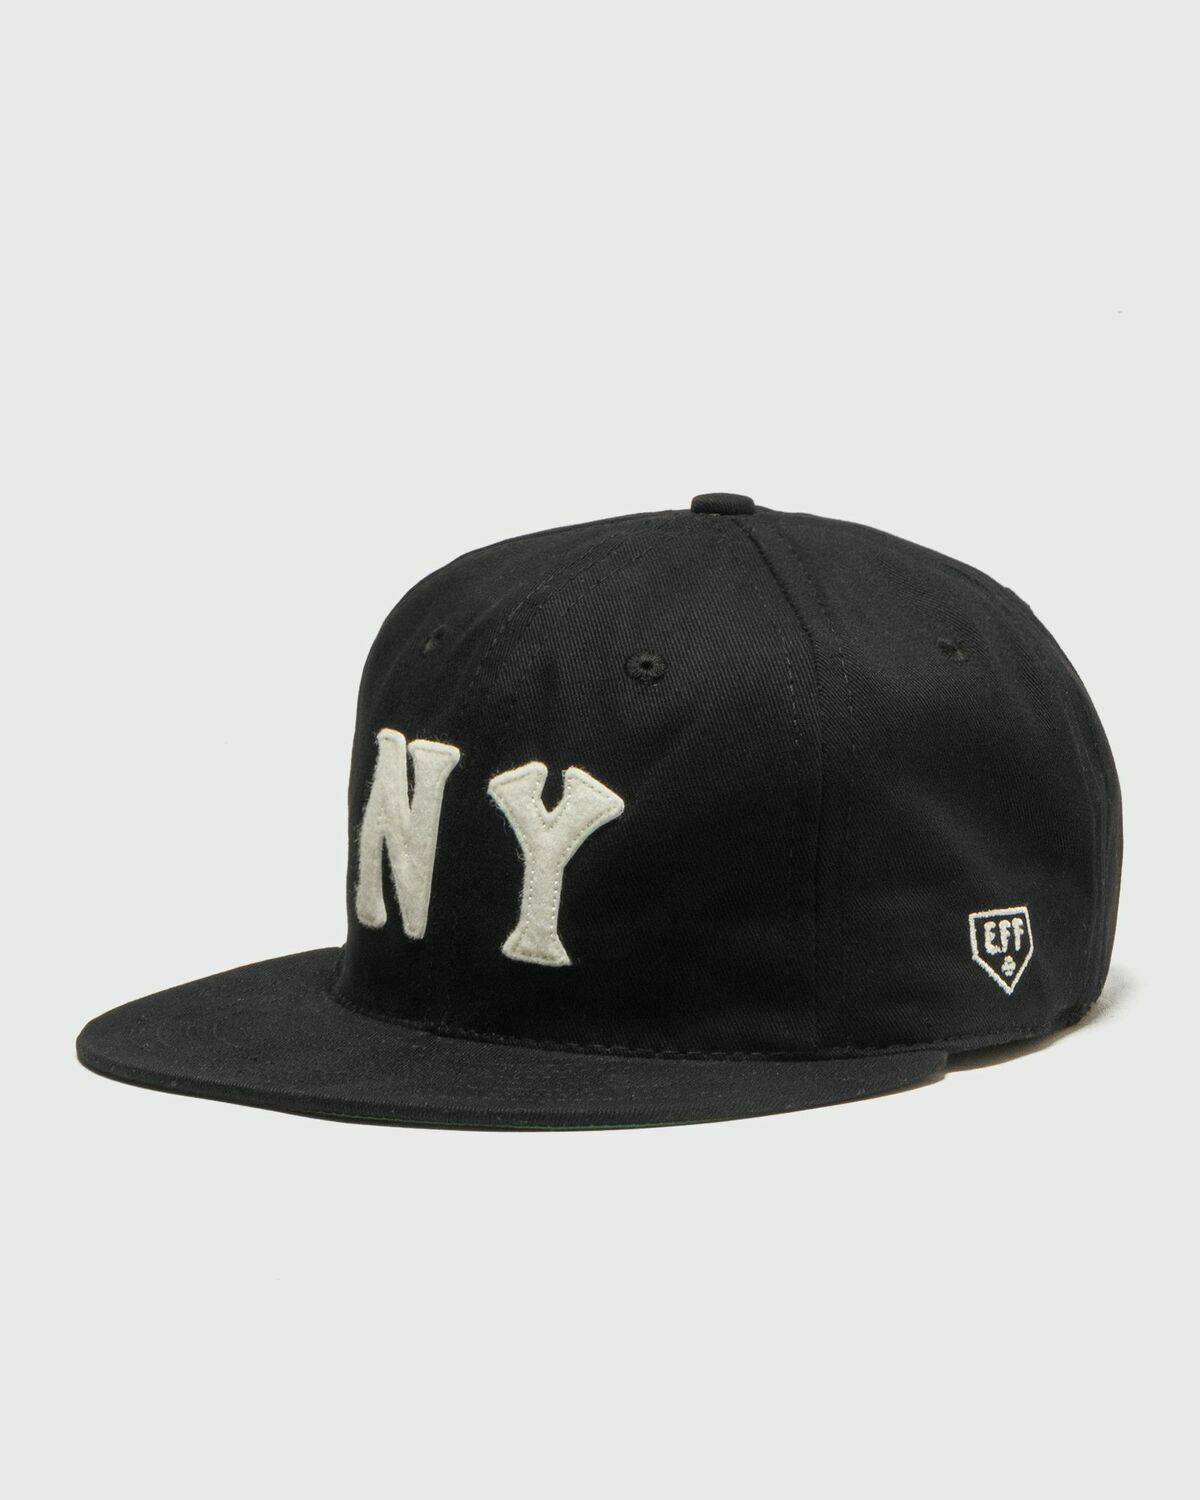 Ebbets Buffalo New York Black Yankees Vintage inspired Ballcap Black